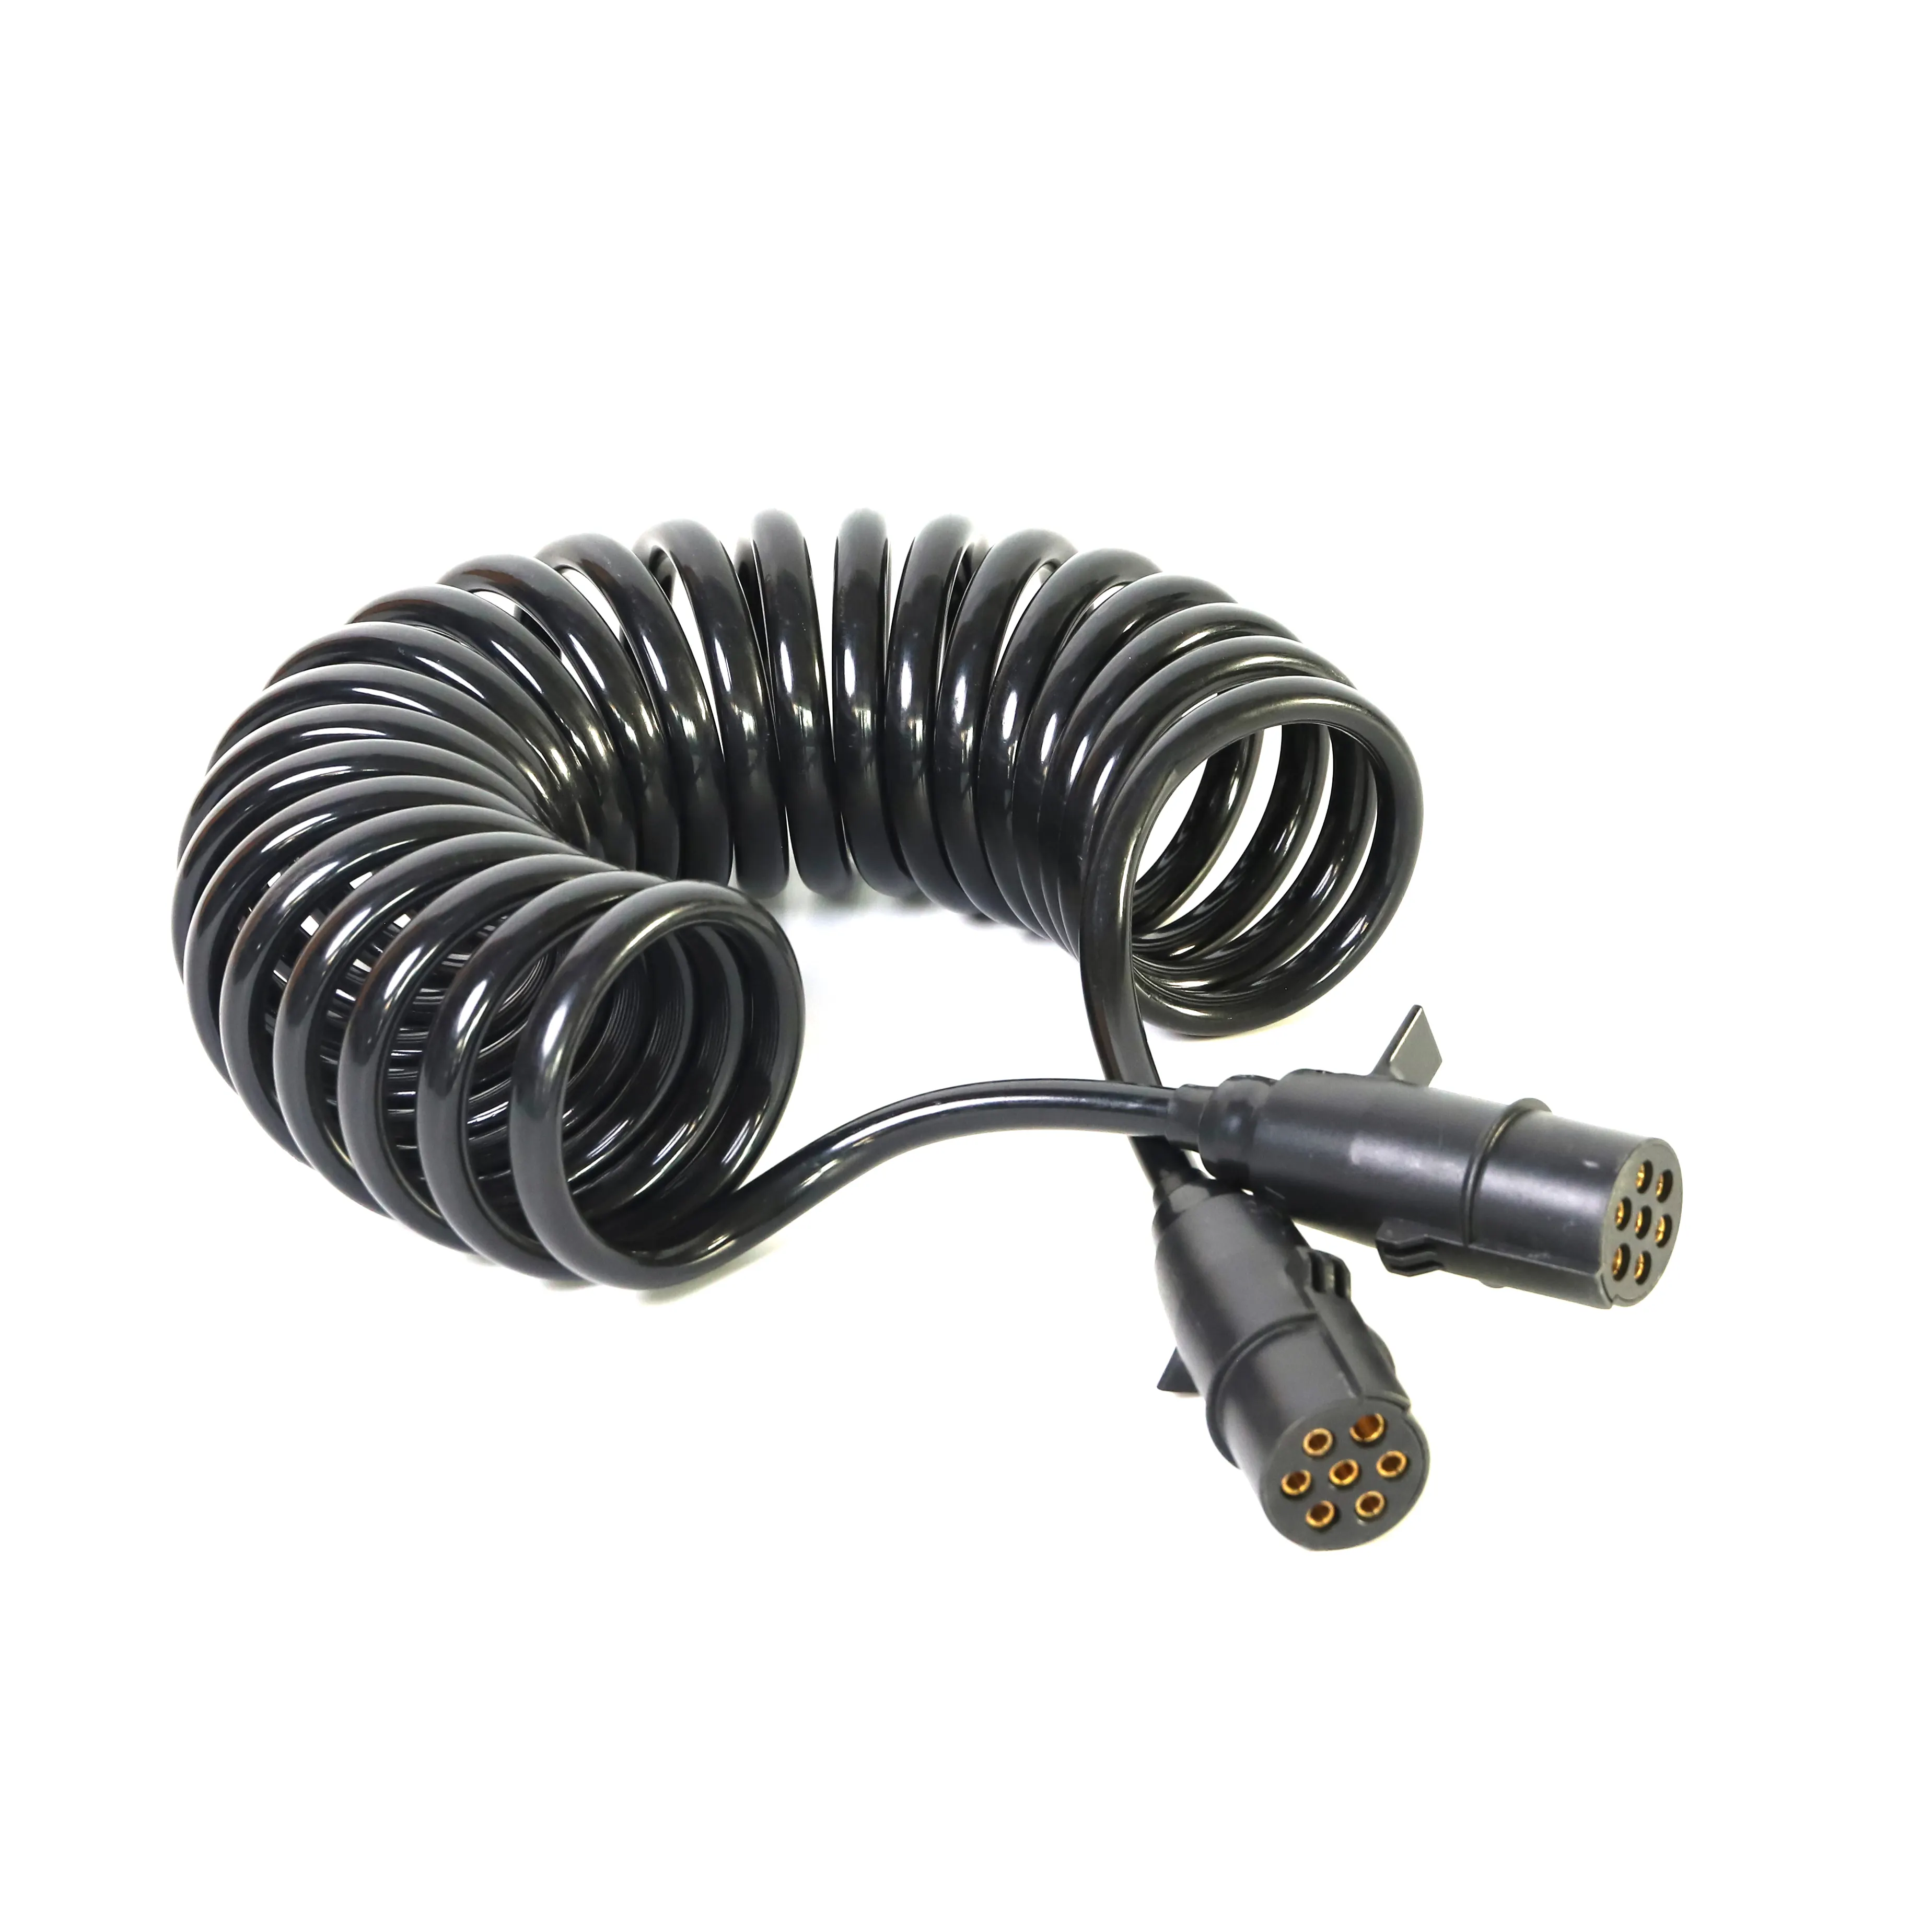 Câble adaptateur de remorque Abs Ebs européen Iso 7 pores 15 broches 7 broches câble en spirale pour remorque de camion avec prise en nylon et support de câble en métal